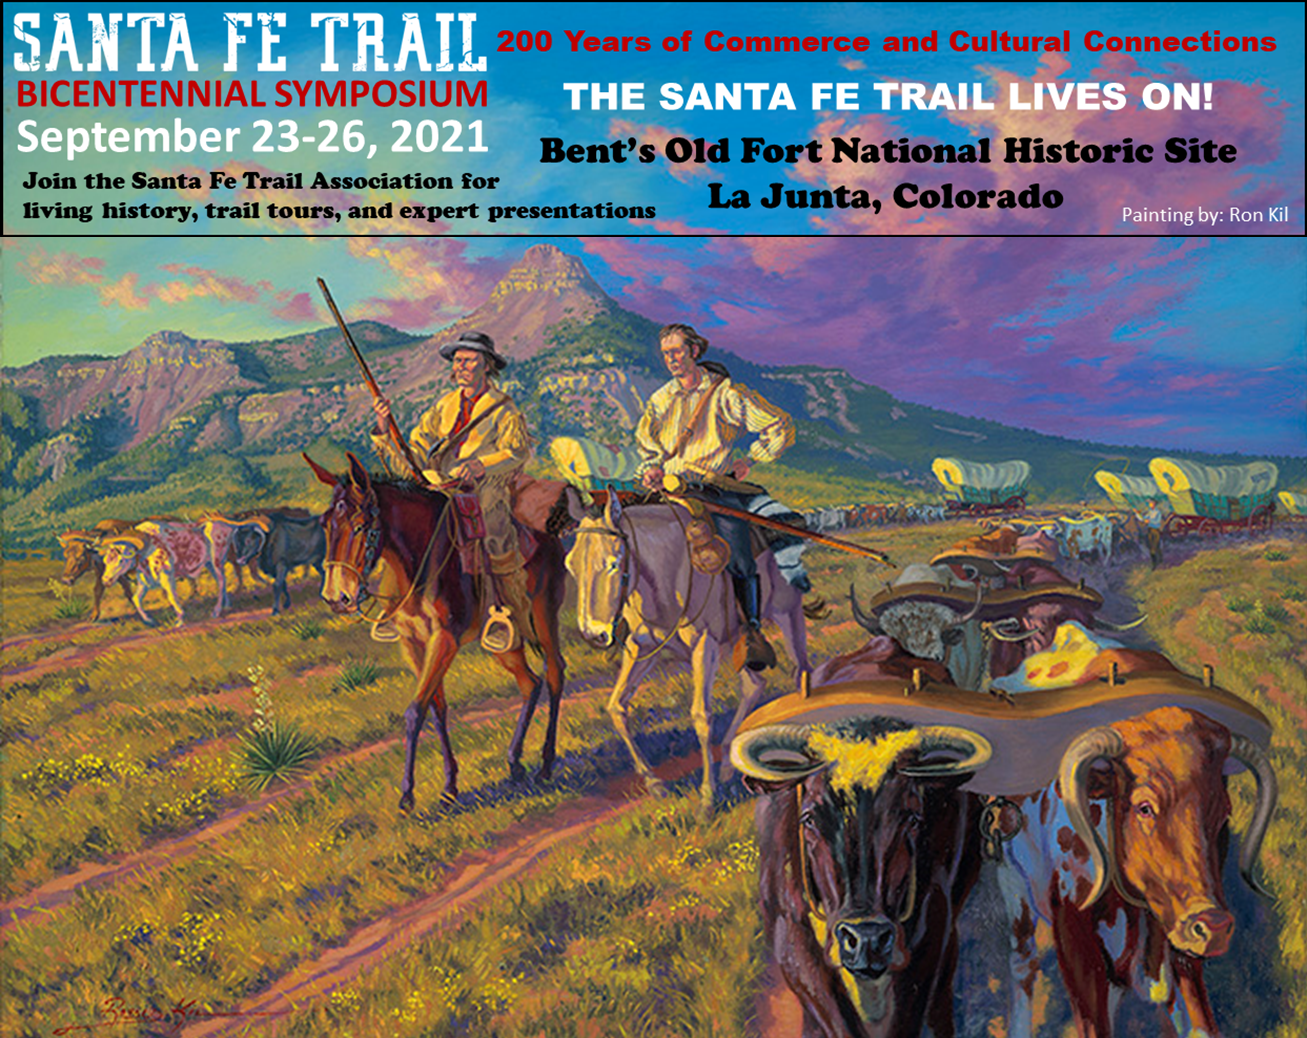 Santa Fe Trail Sidebar Ad SECO News seconews.org